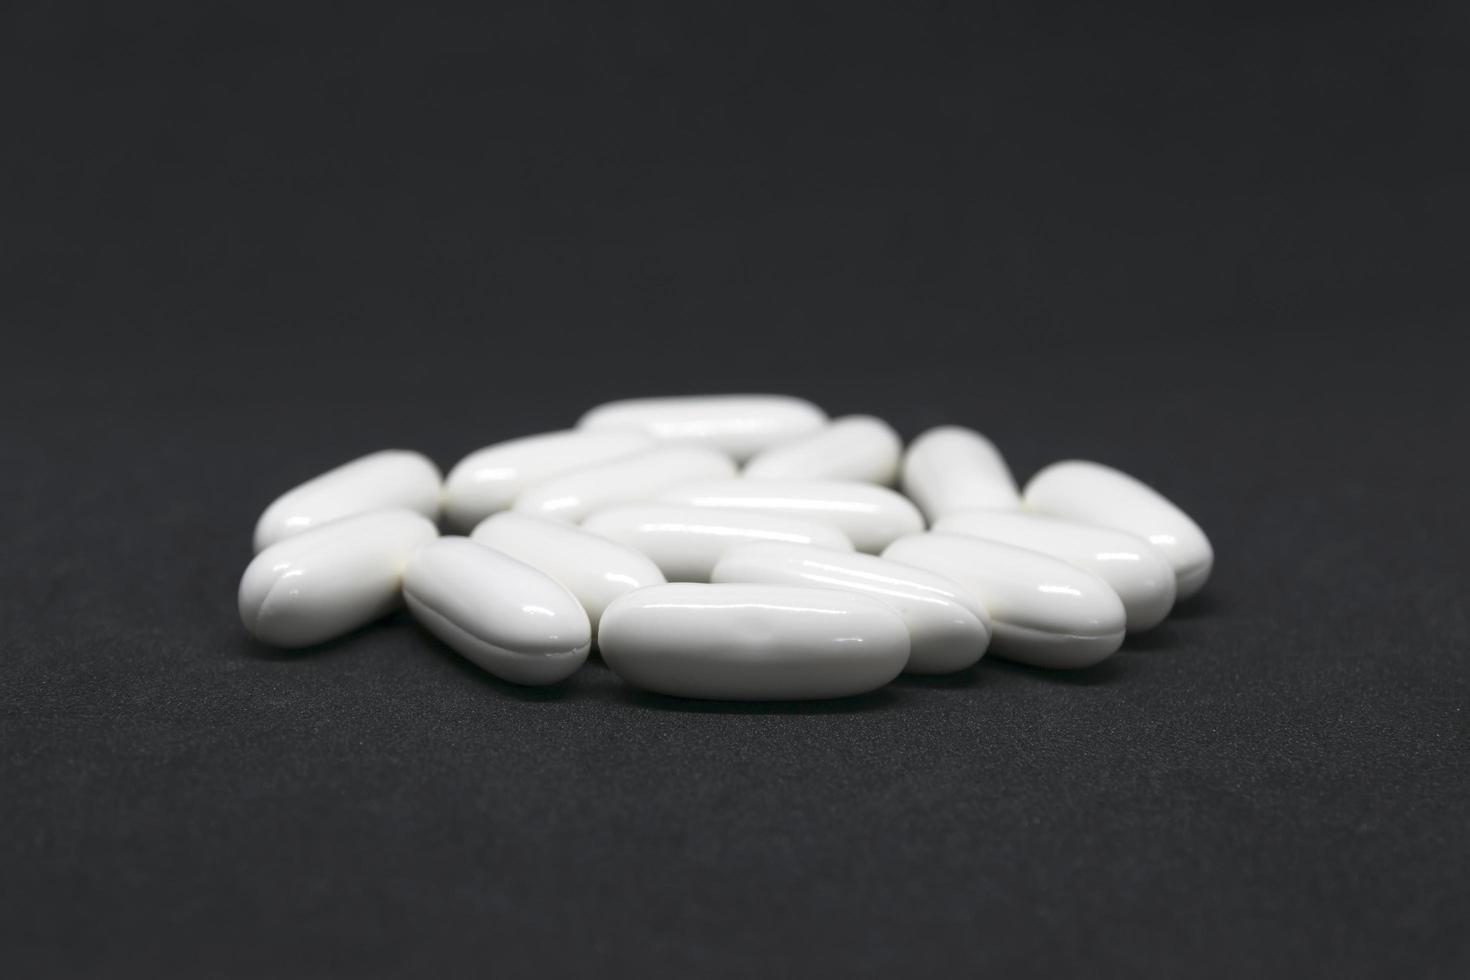 White medicine tablets photo